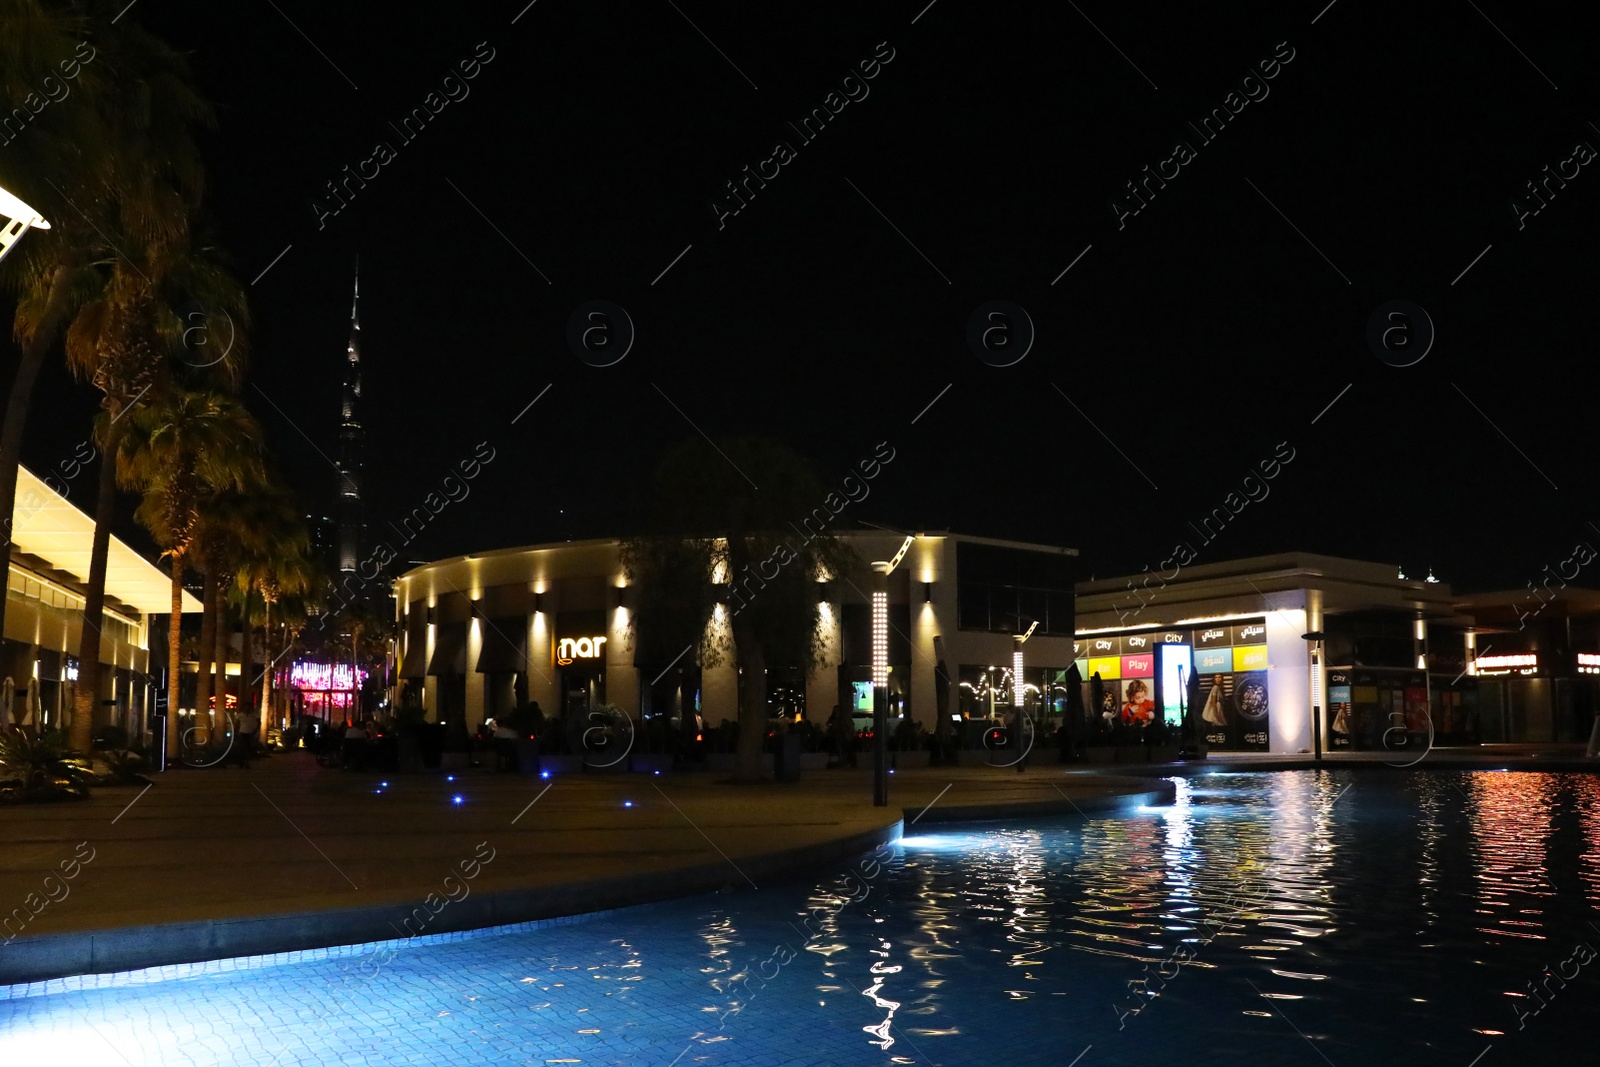 Photo of DUBAI, UNITED ARAB EMIRATES - NOVEMBER 04, 2018: Night cityscape with illuminated buildings, palms and pool